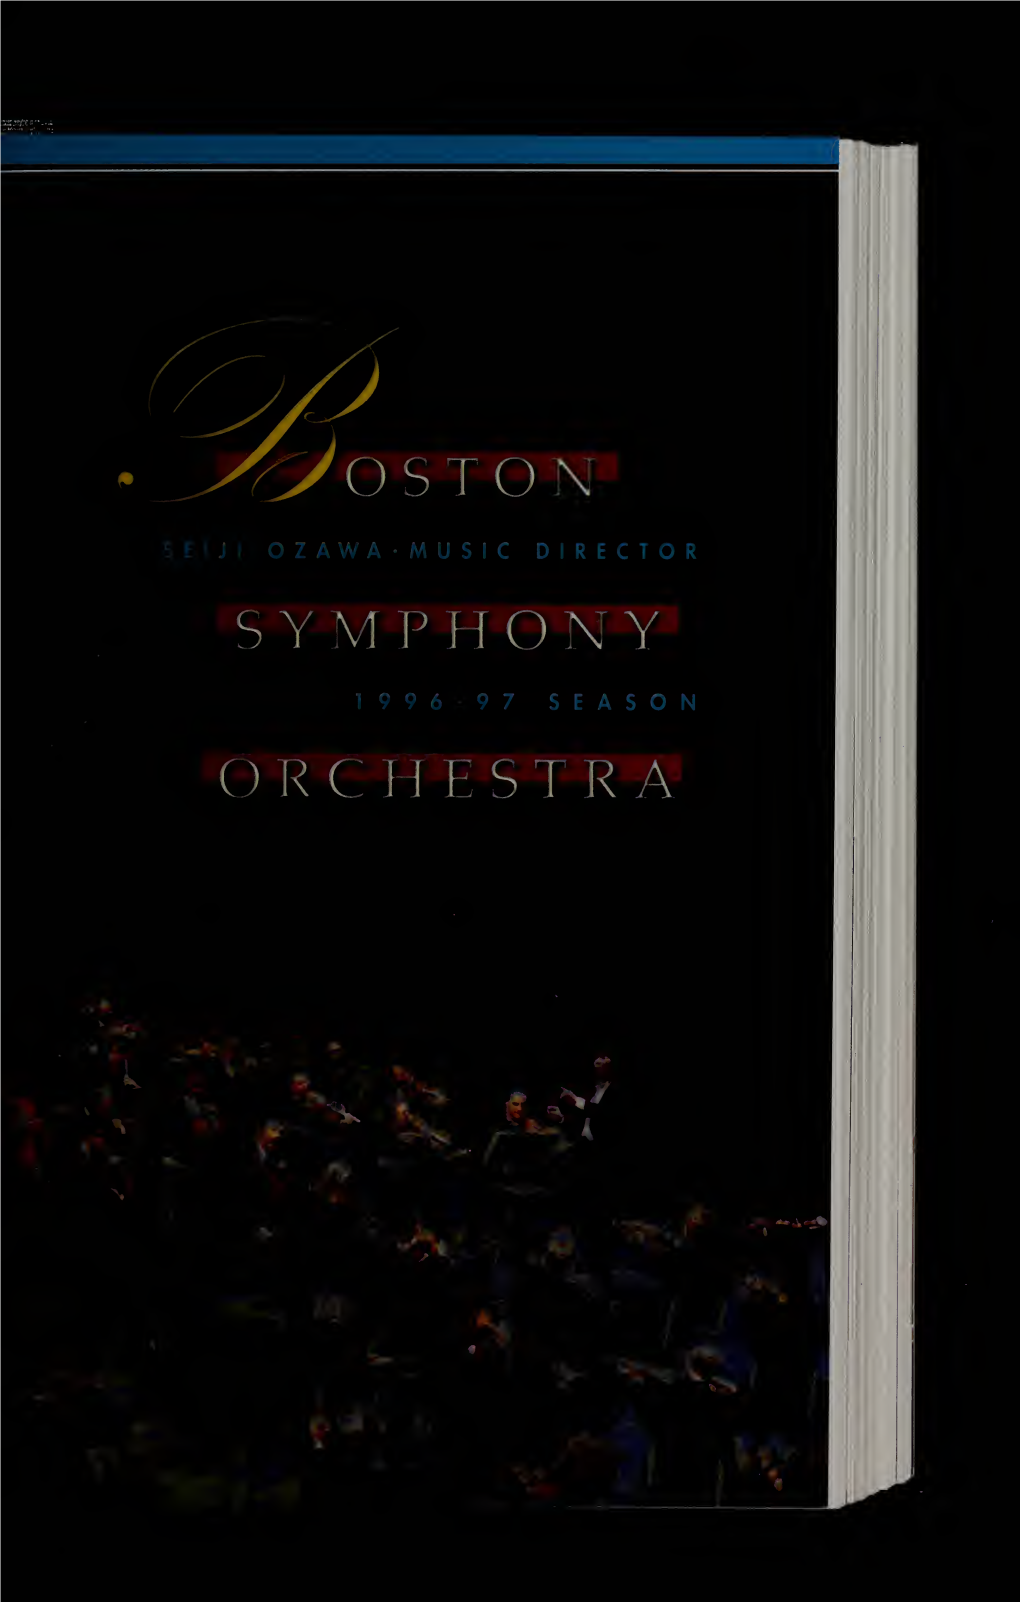 Boston Symphony Orchestra Concert Programs, Season 116, 1996